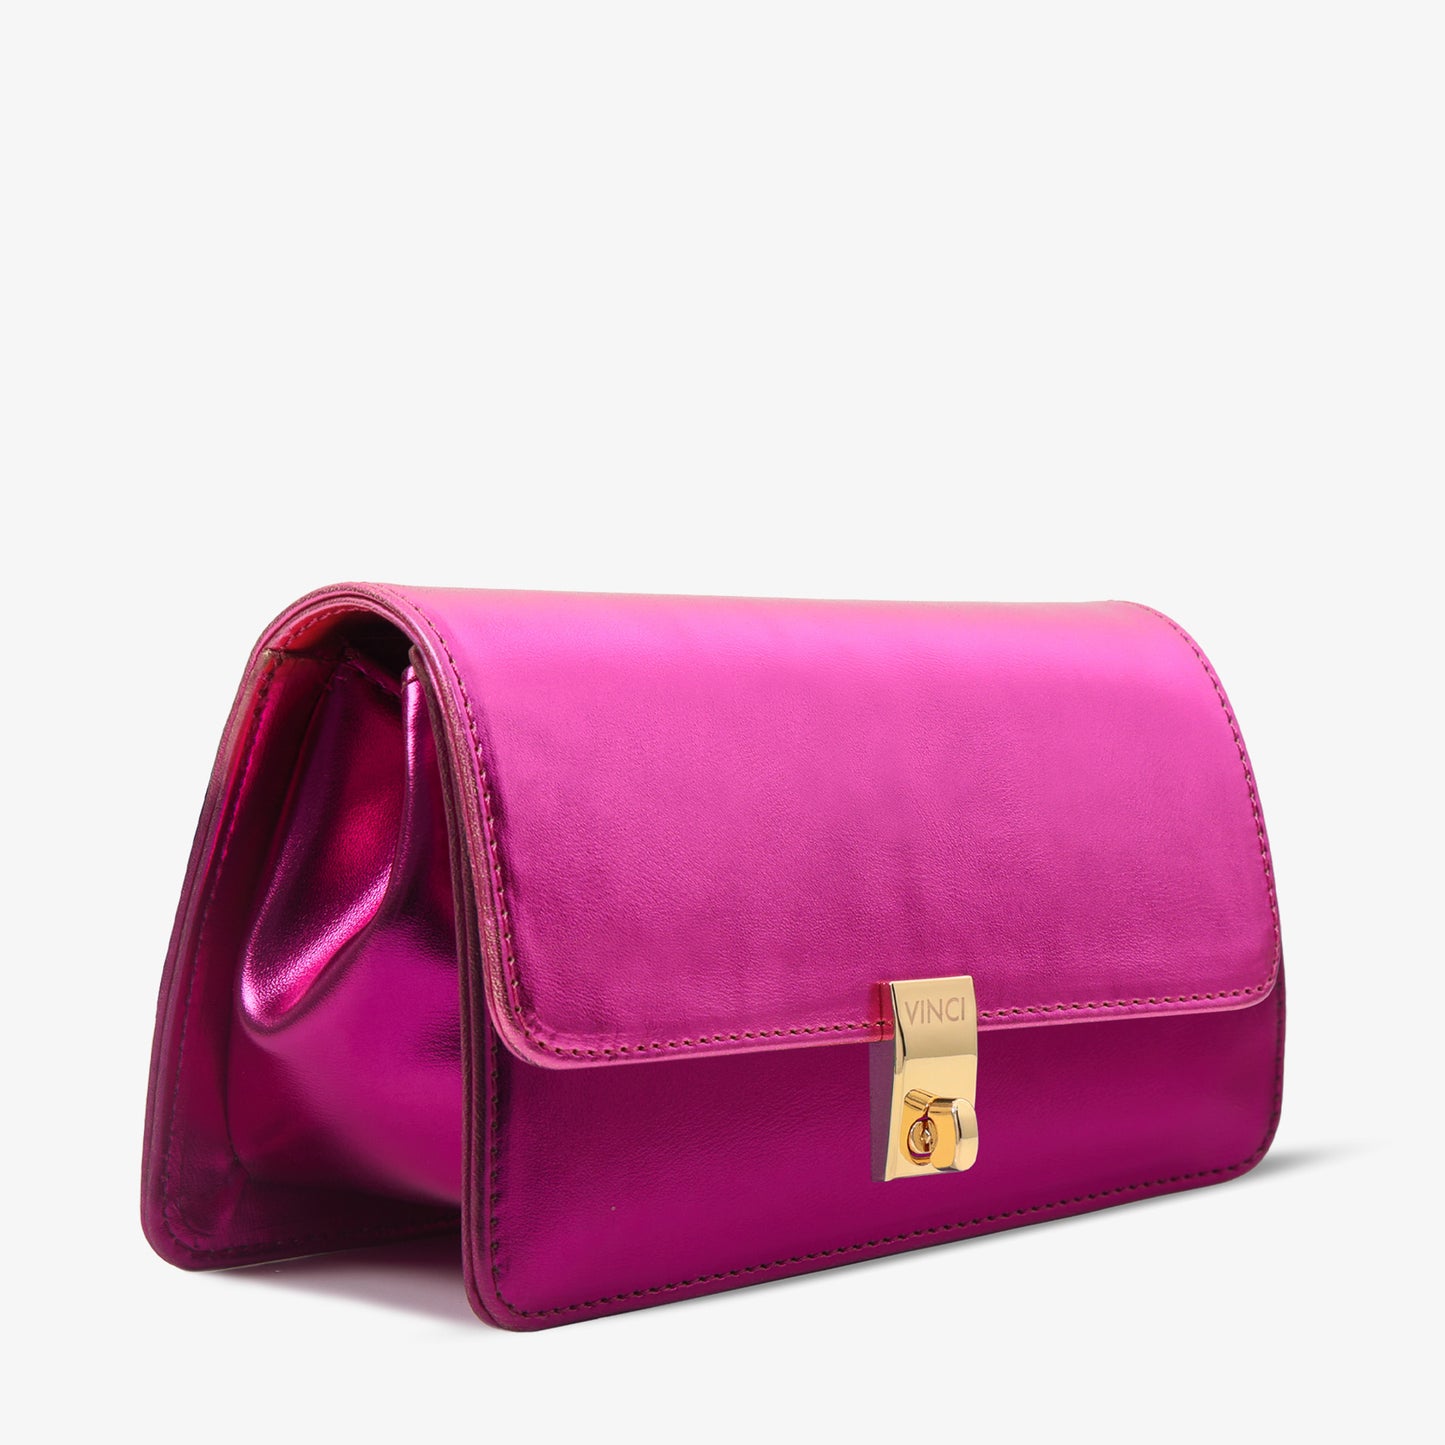 The Torola Fuchsia Handbag